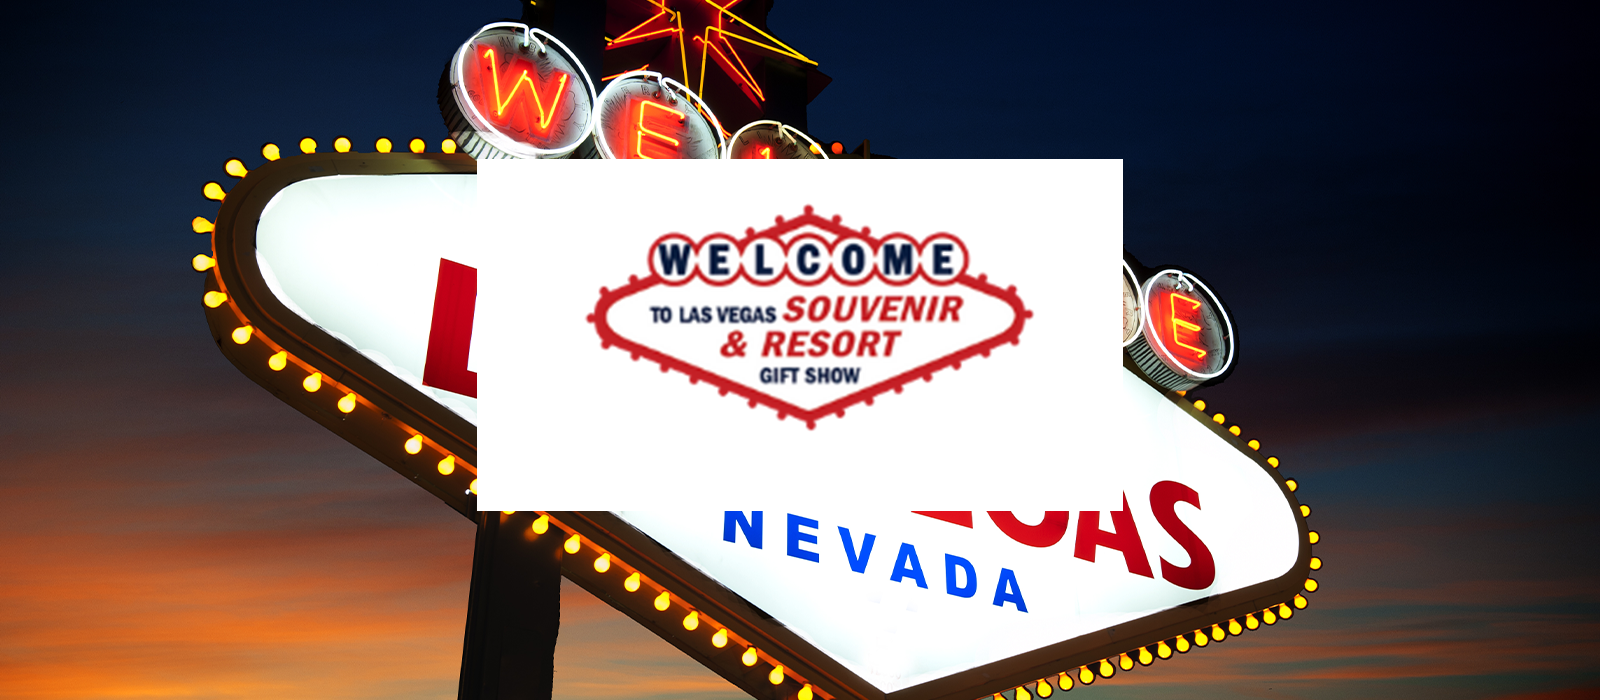 Las Vegas Souvenir & Resort Gift Show 2021 Network.Vegas